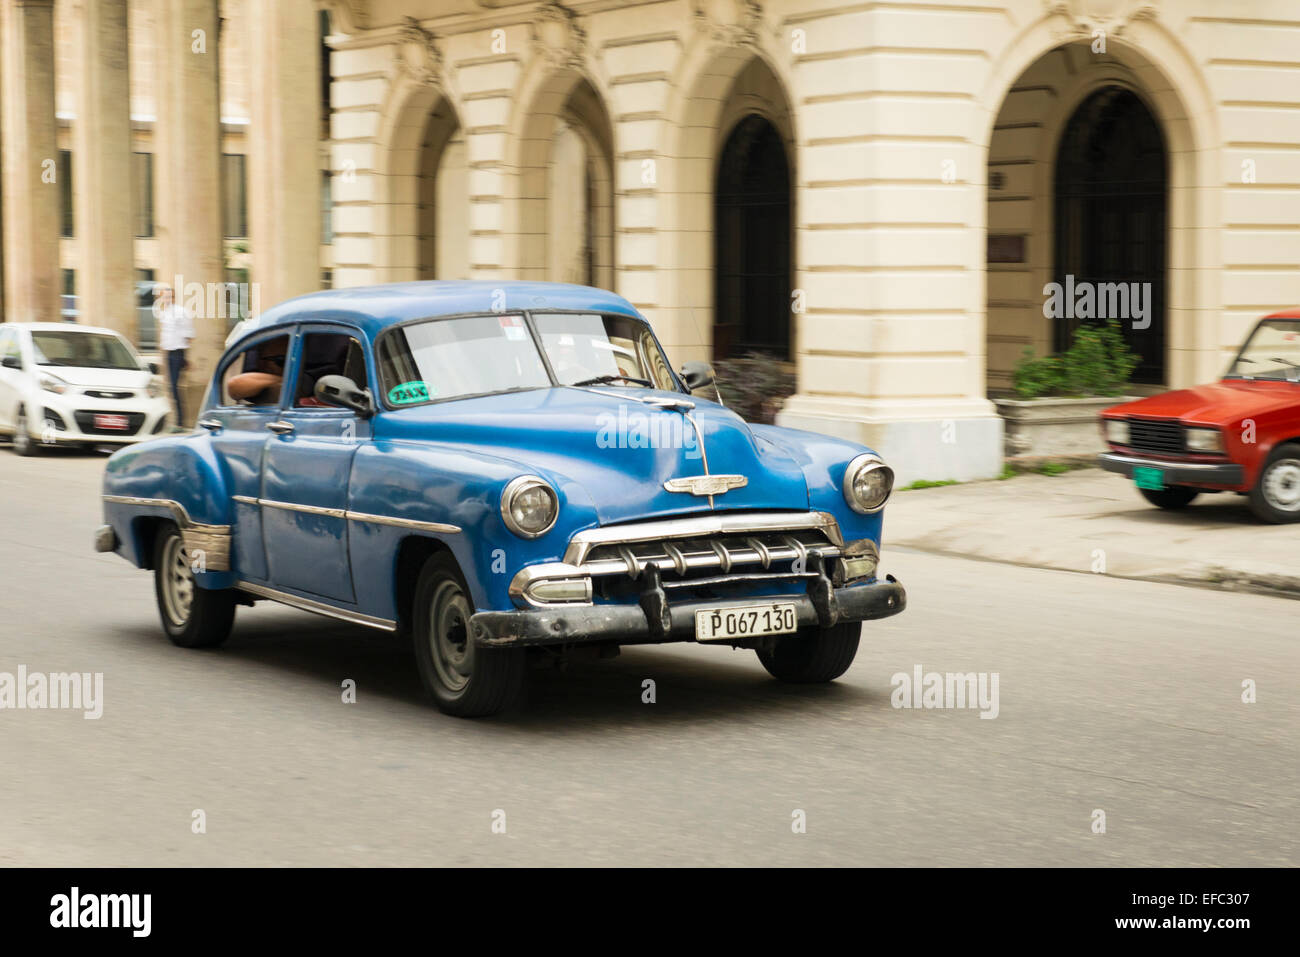 Cuba Old Havana La Habana Vieja Calle Zulueta moving old classic vintage 1950's American car taxi cab dark blue Chevy Chevrolet Stock Photo